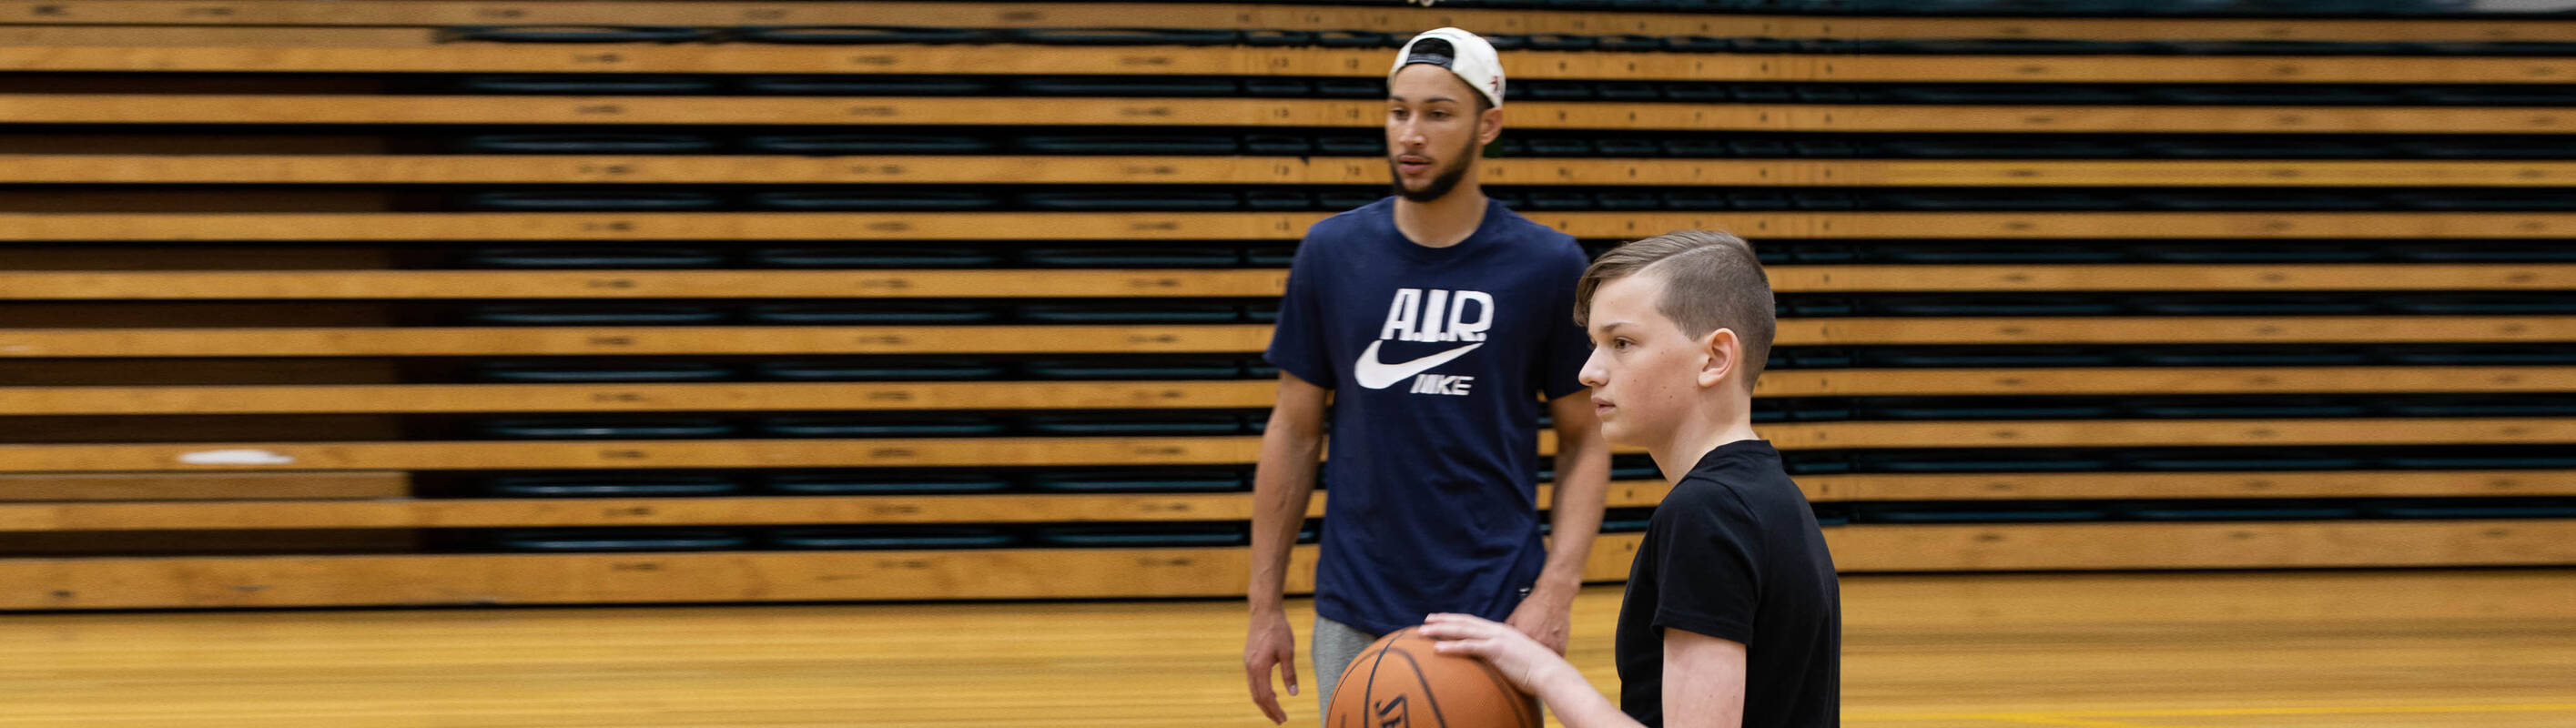 Make-A-Wish Australia wish kid Claude playing basketball with NBA star Ben Simmons